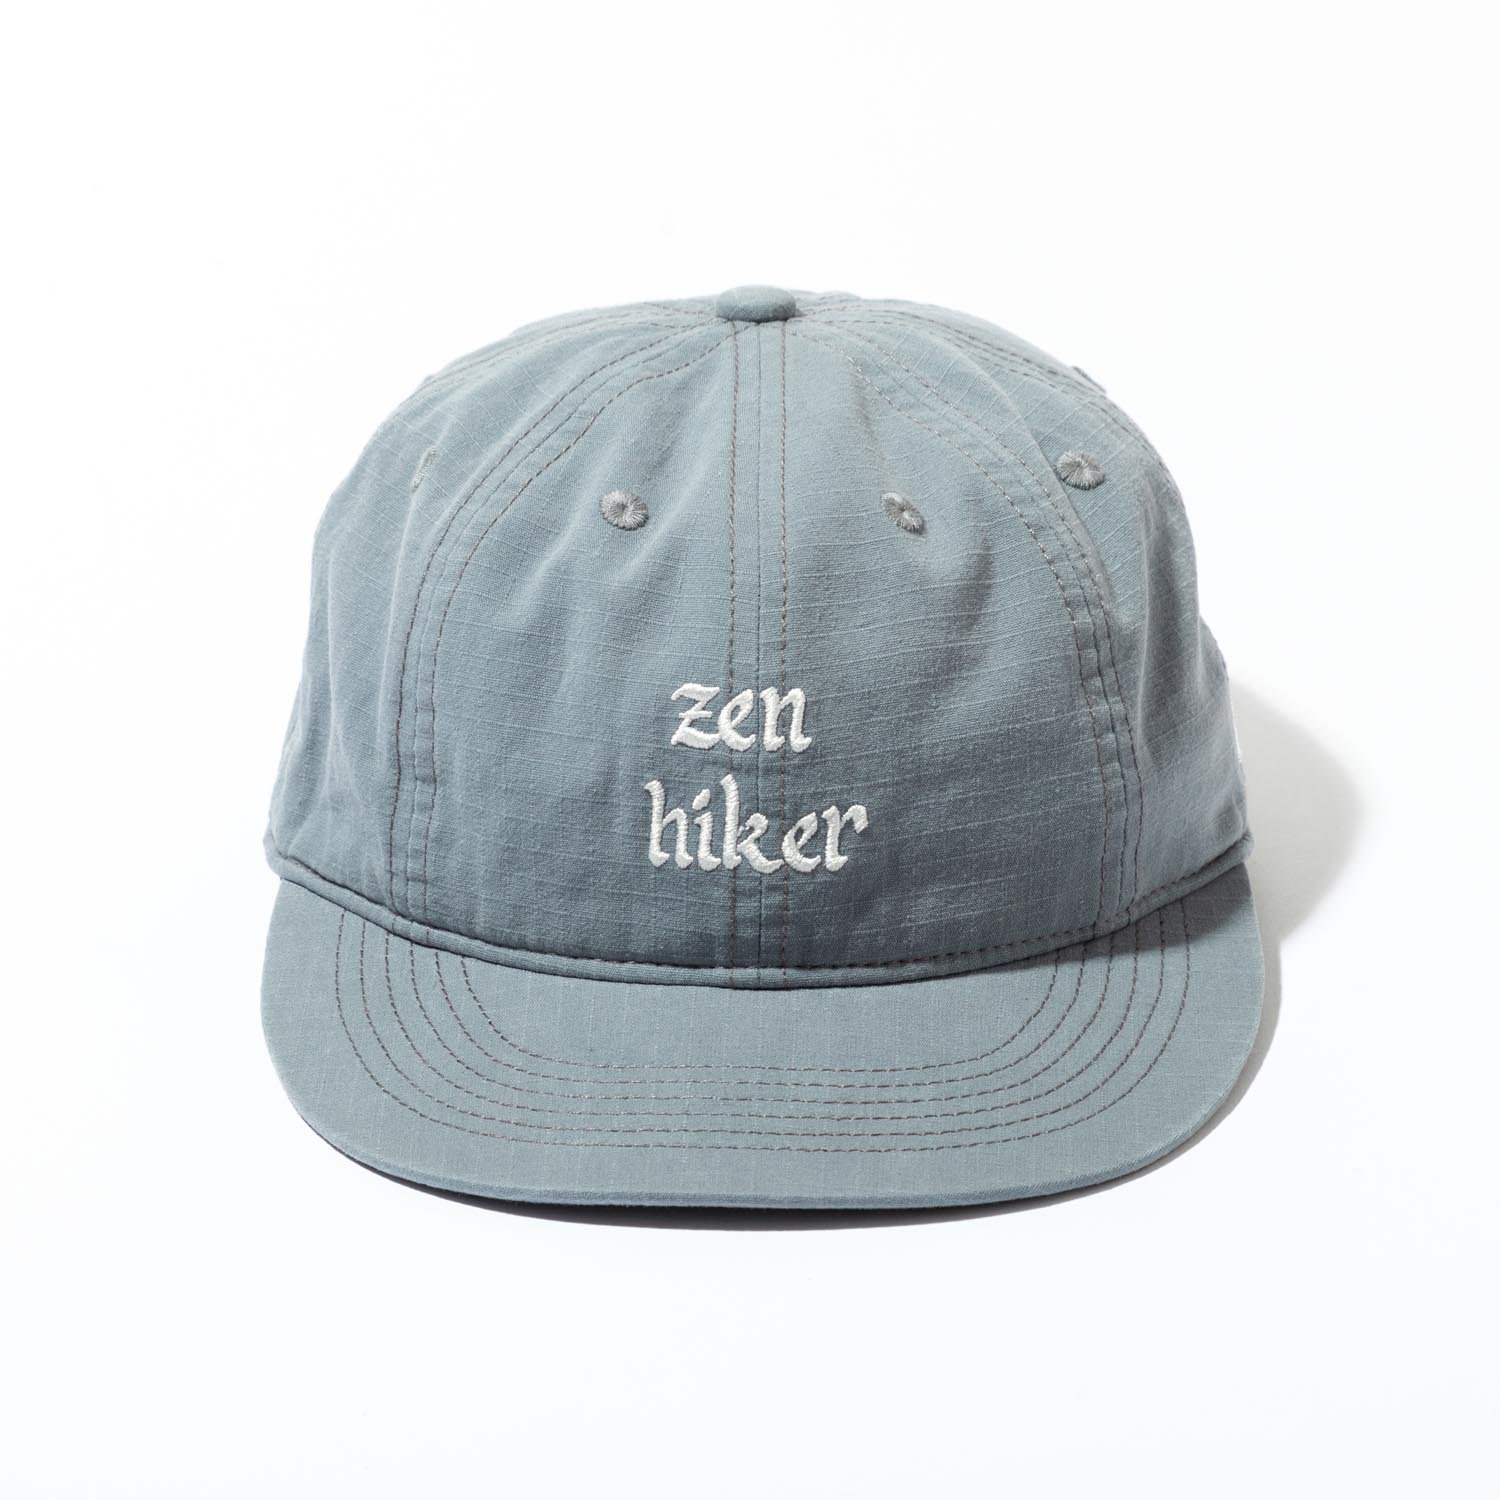 ZEN HIKER CAP '23 designed by Jerry UKAI - TACOMA FUJI RECORDS